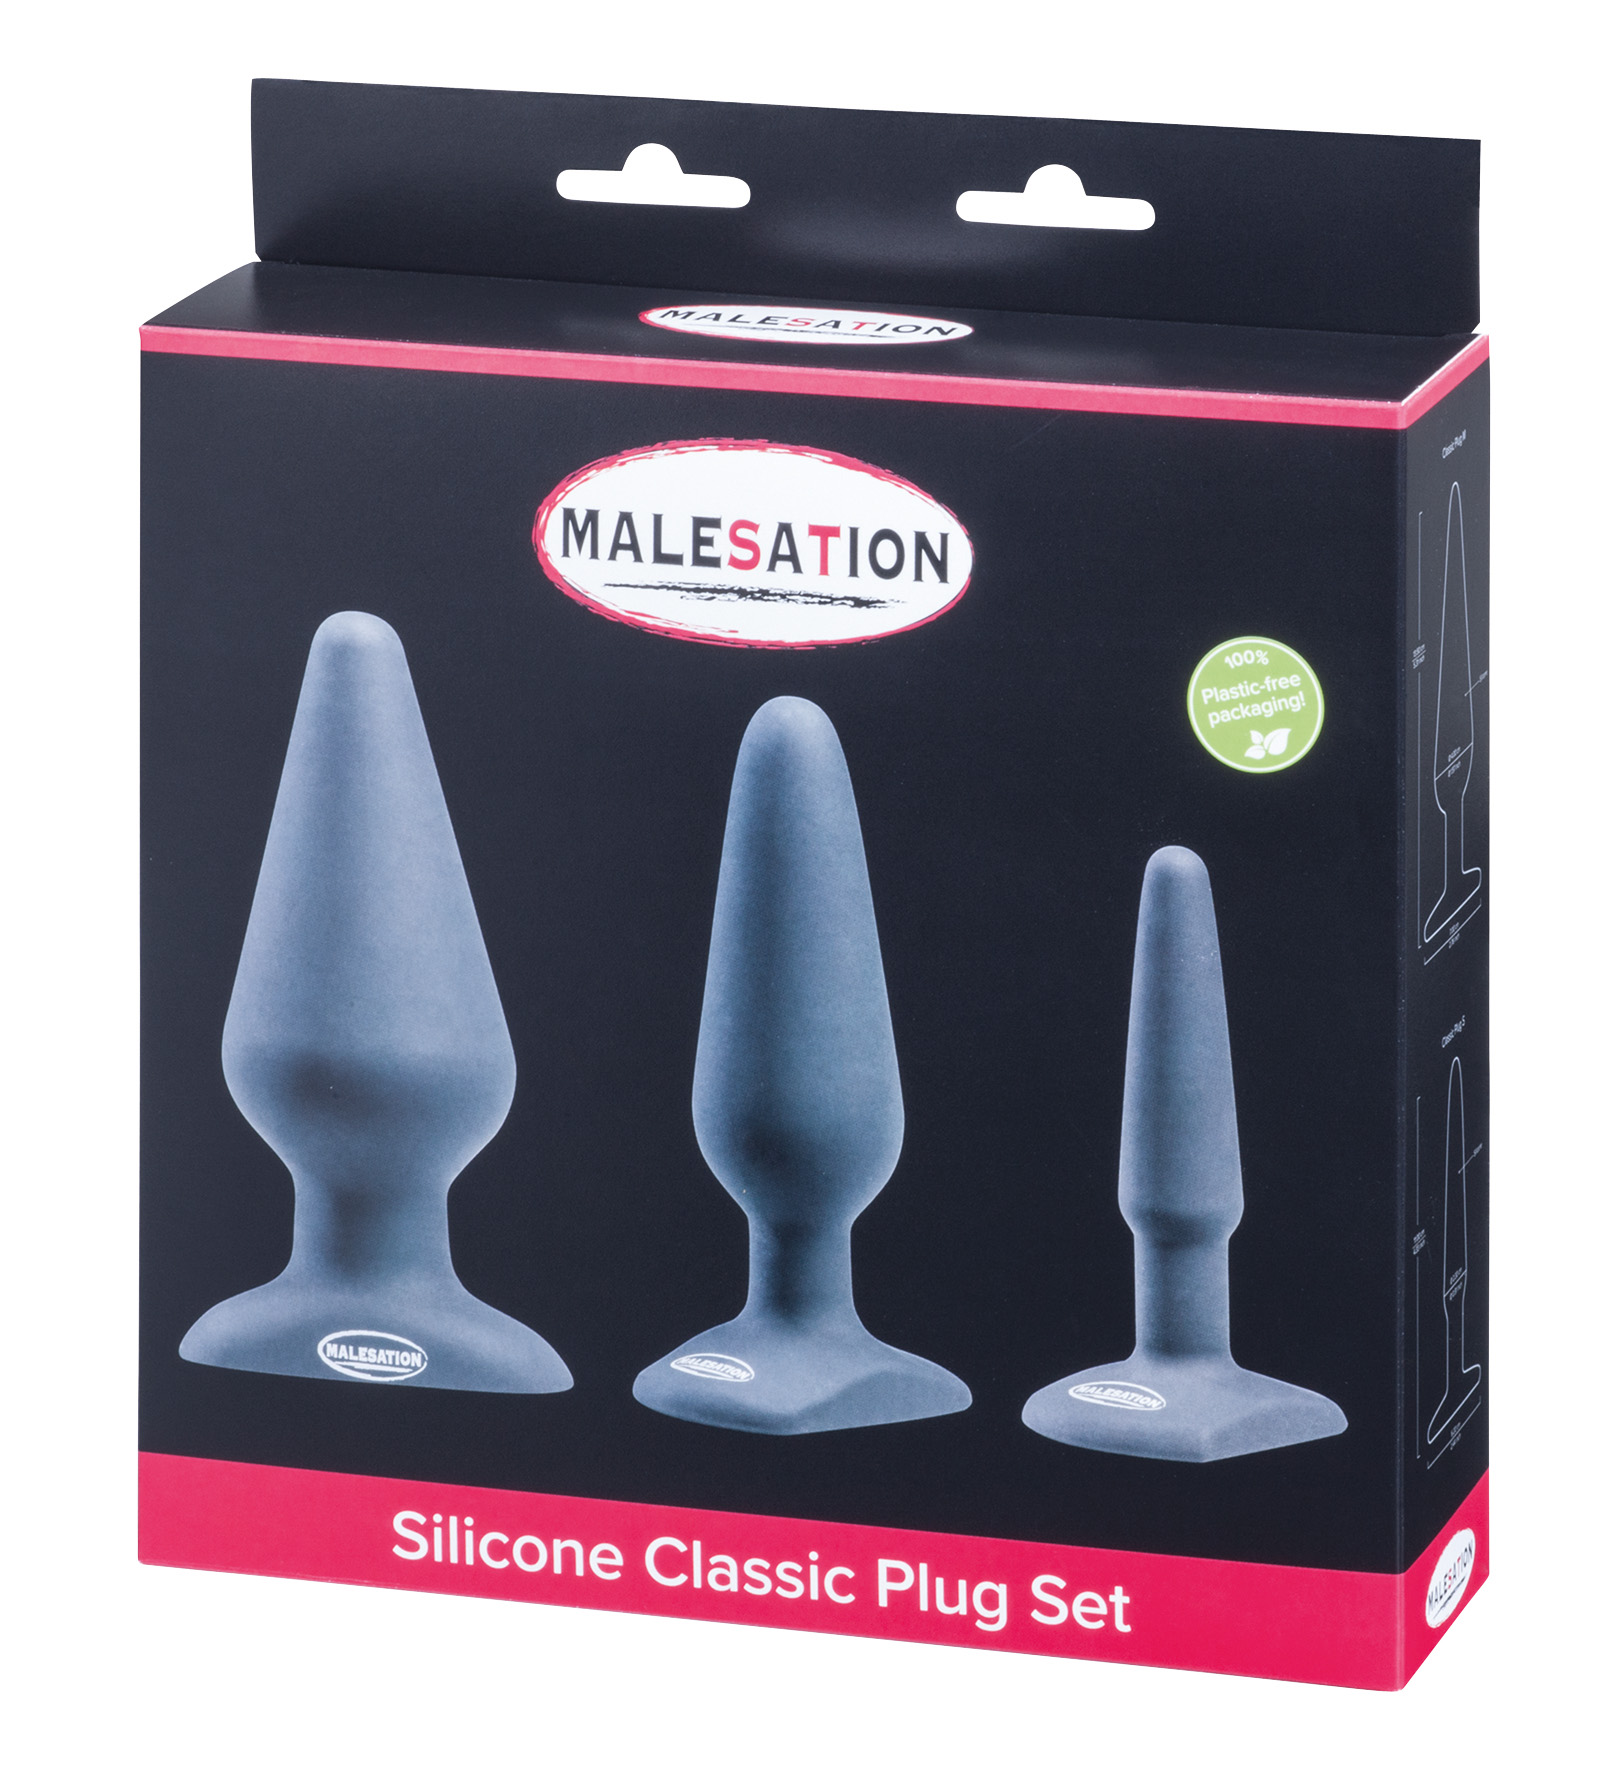 MALESATION Silicone Classic Plug Set